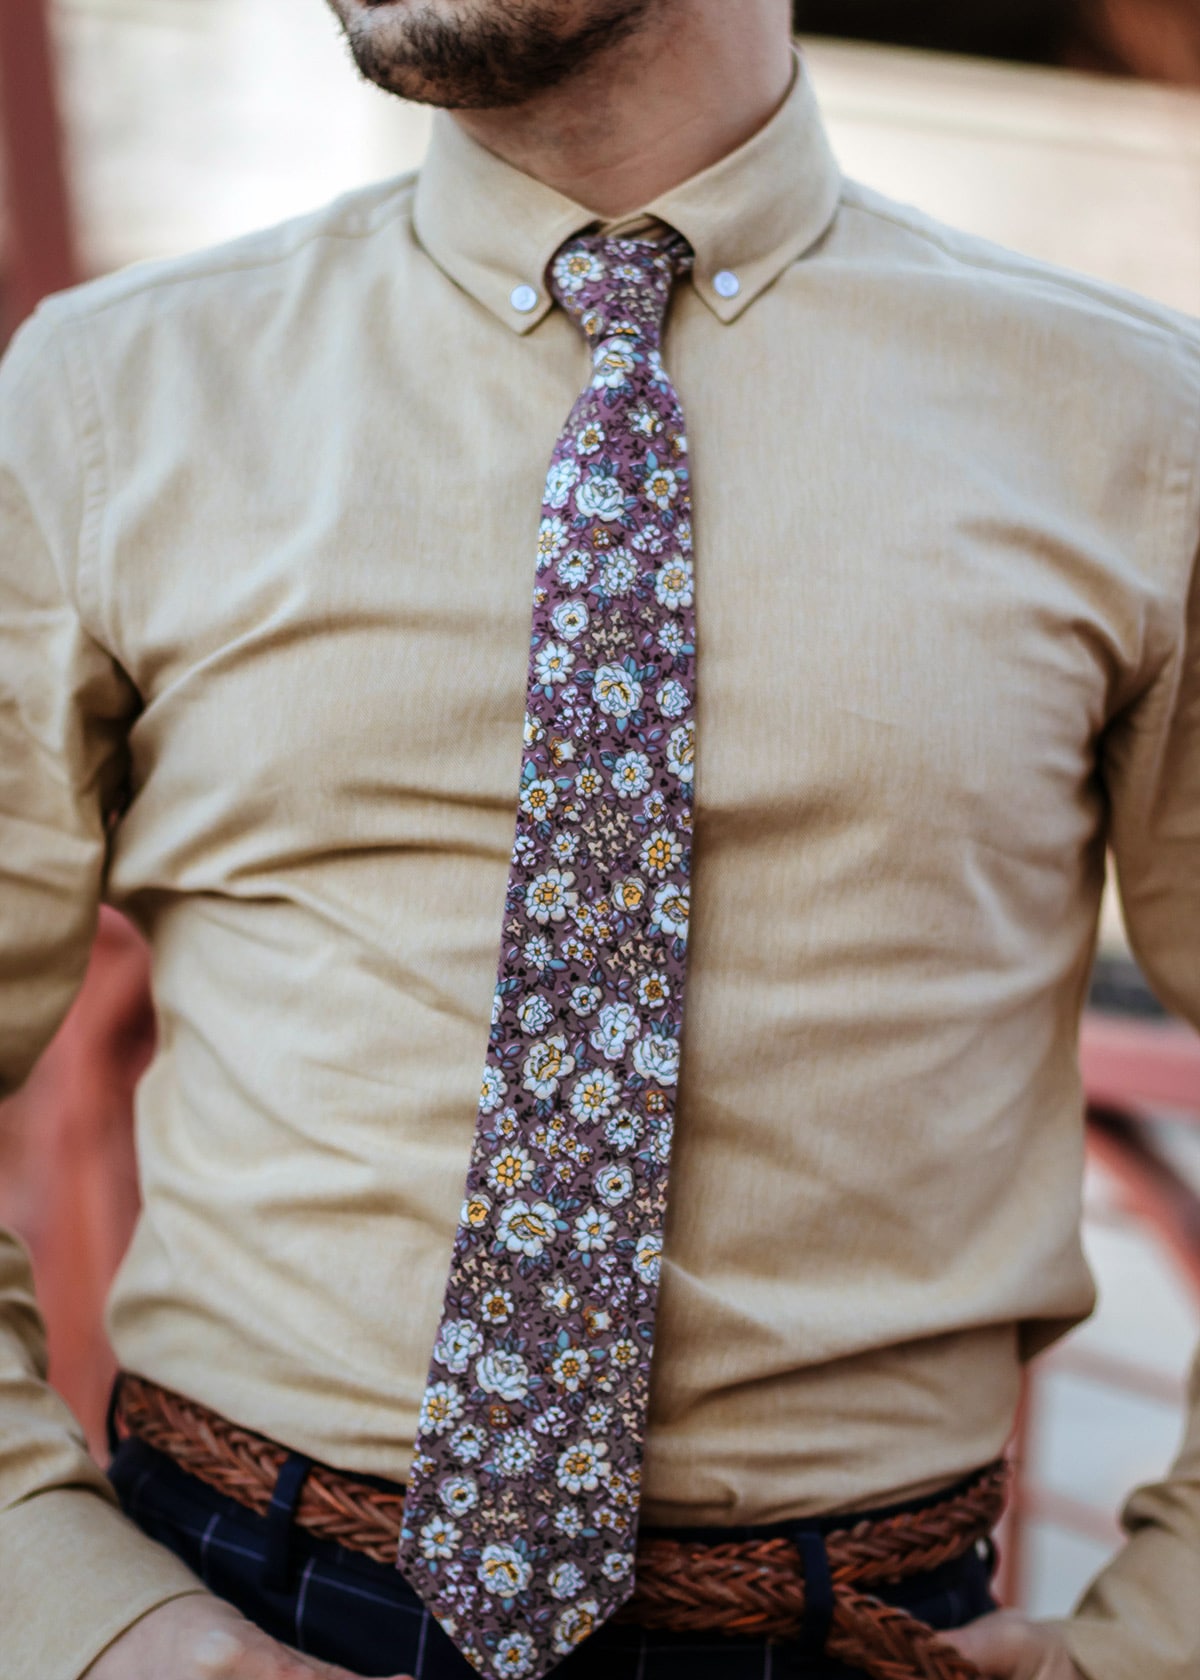 Smart 5 David wearing a floral tie